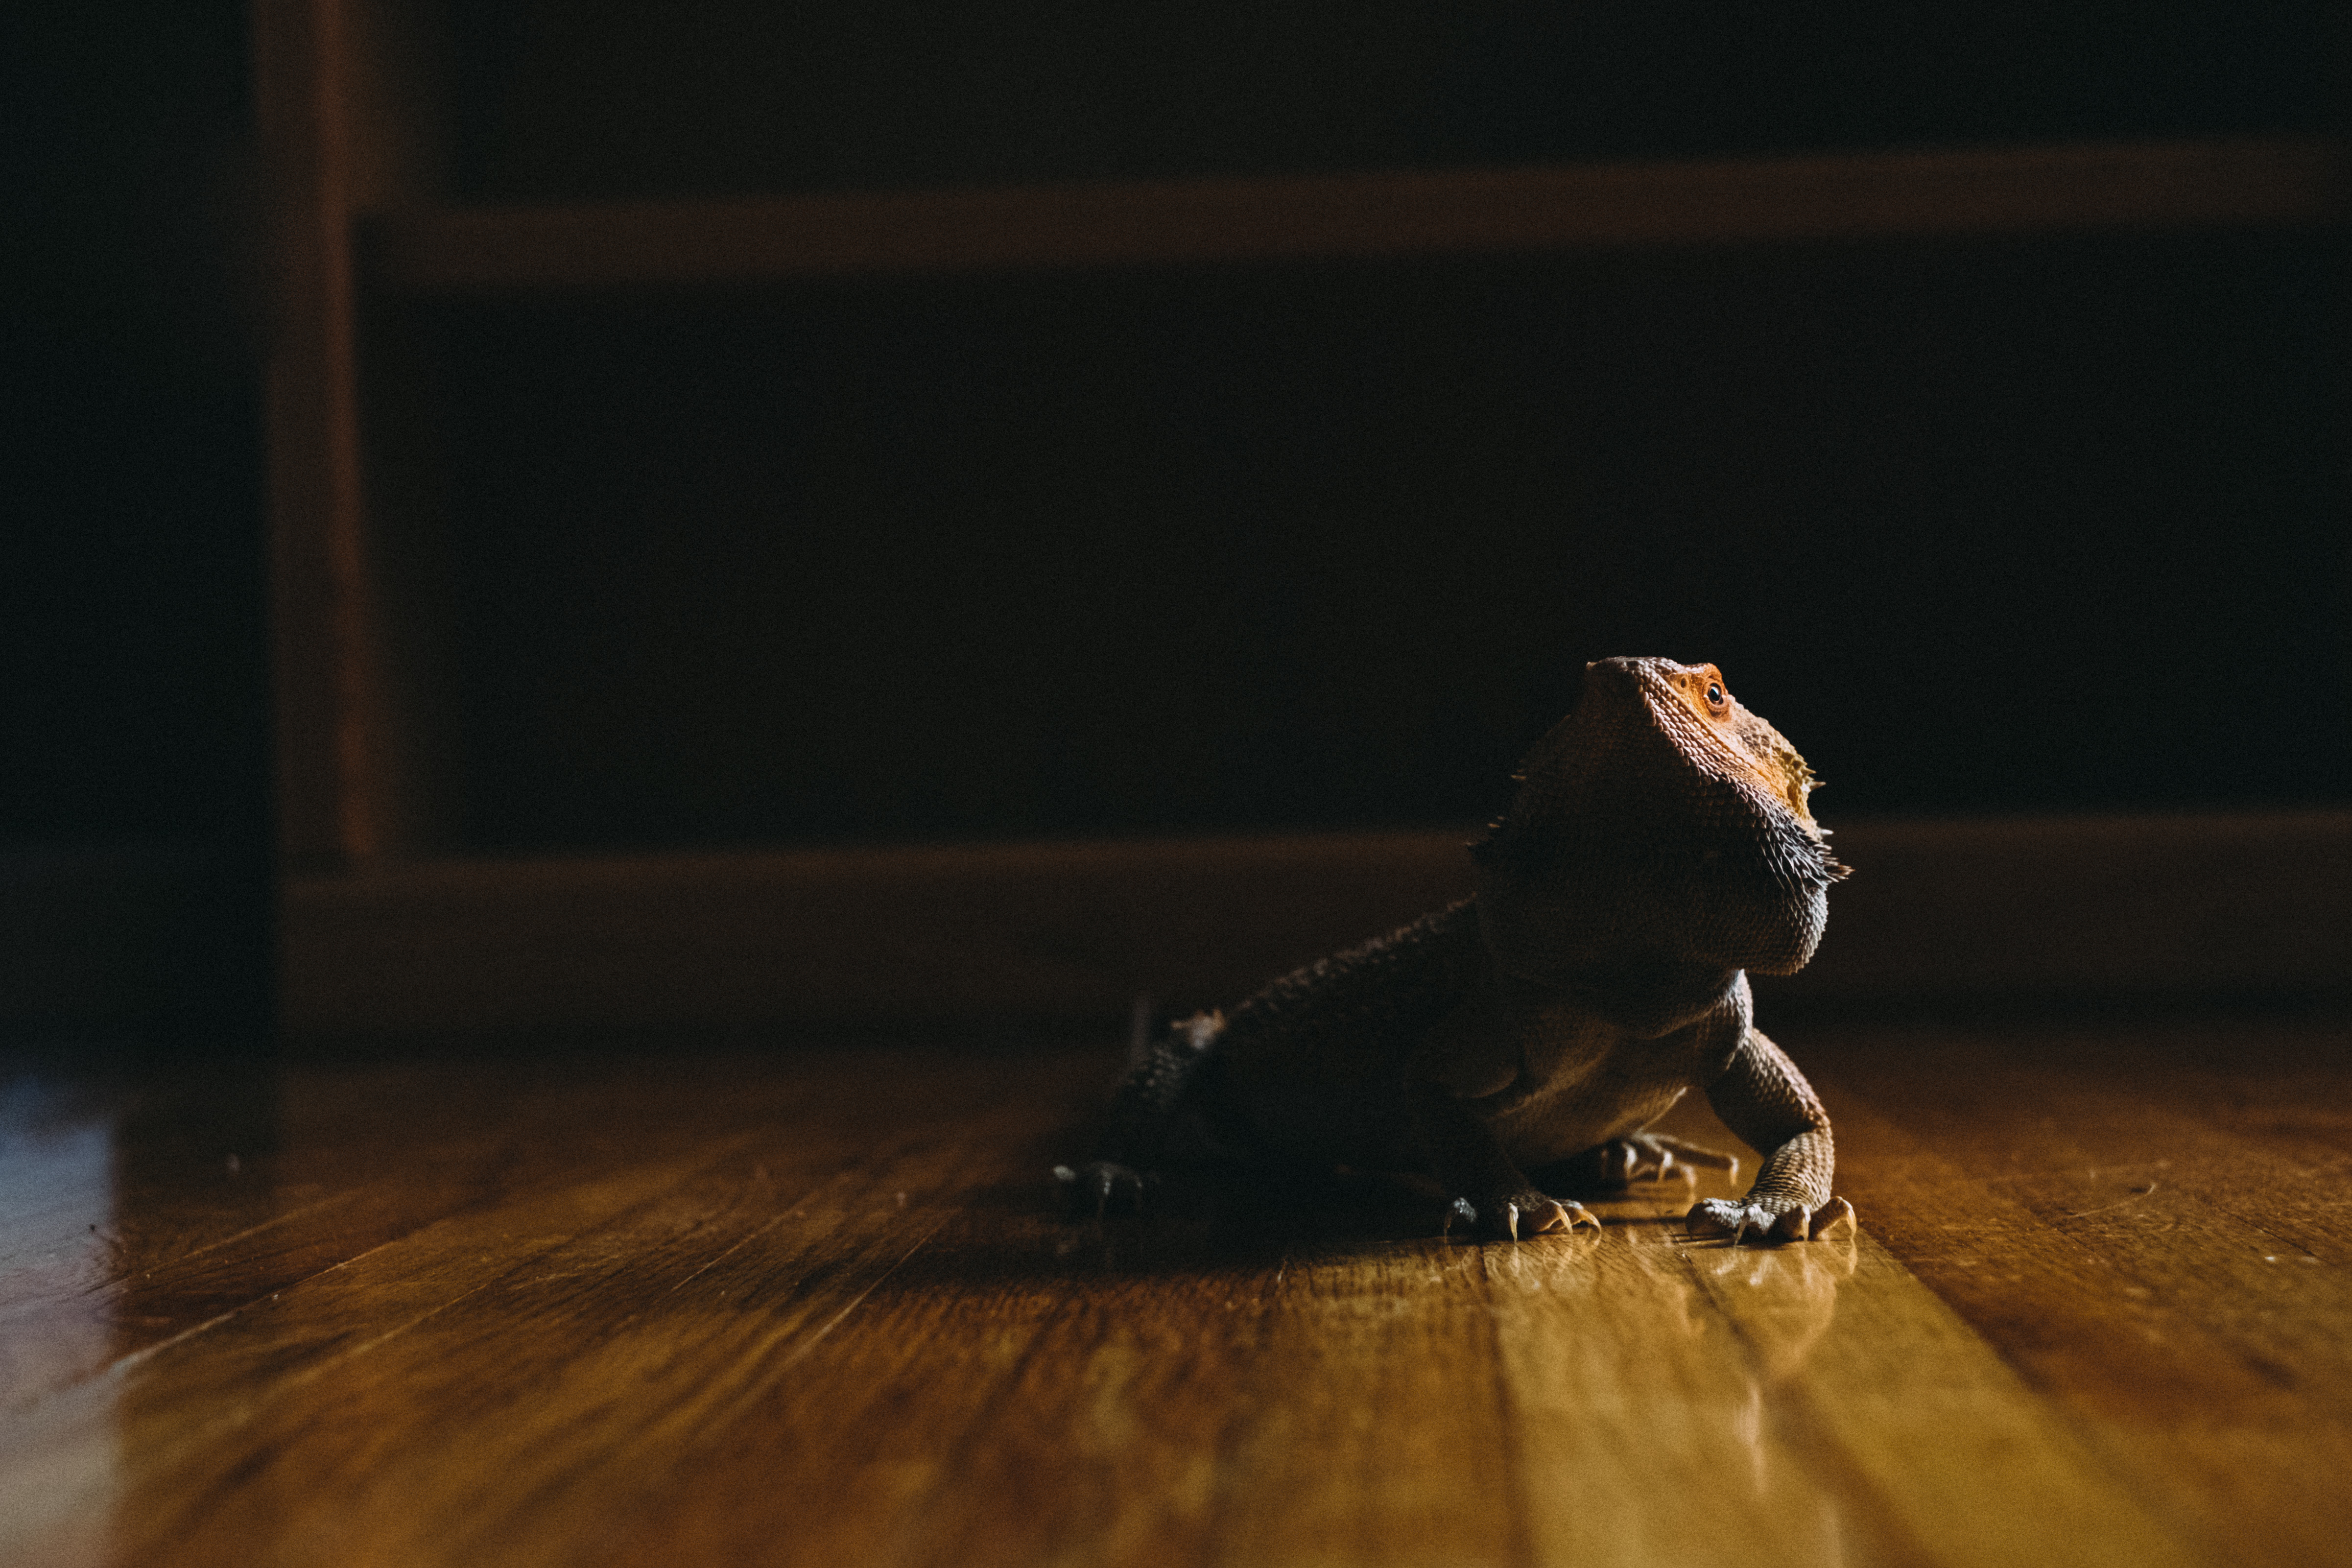 A domestic lizard crawls on the laminate flooring